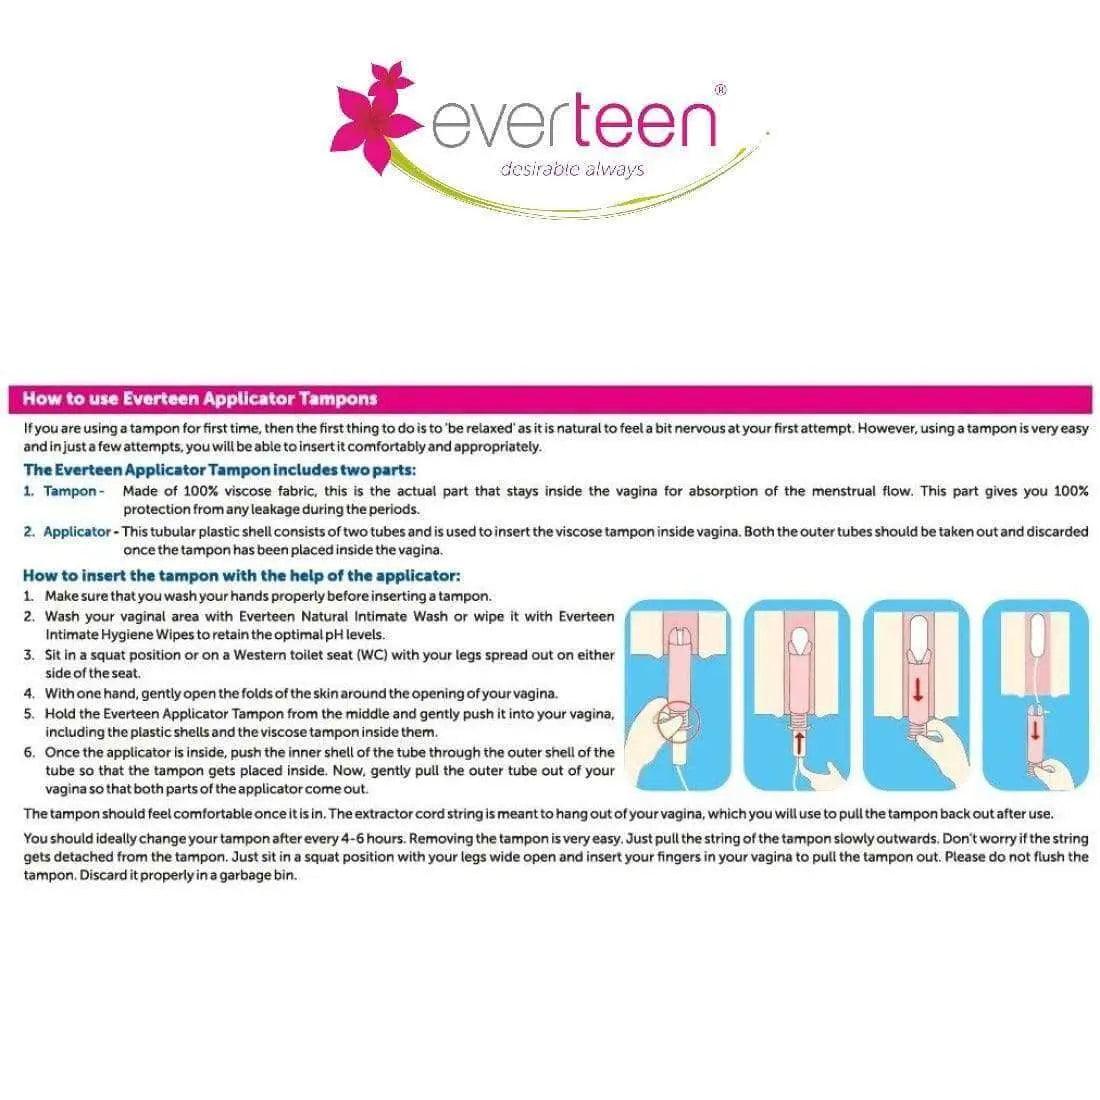 everteen Applicator Tampons for Menstrual Periods in Women